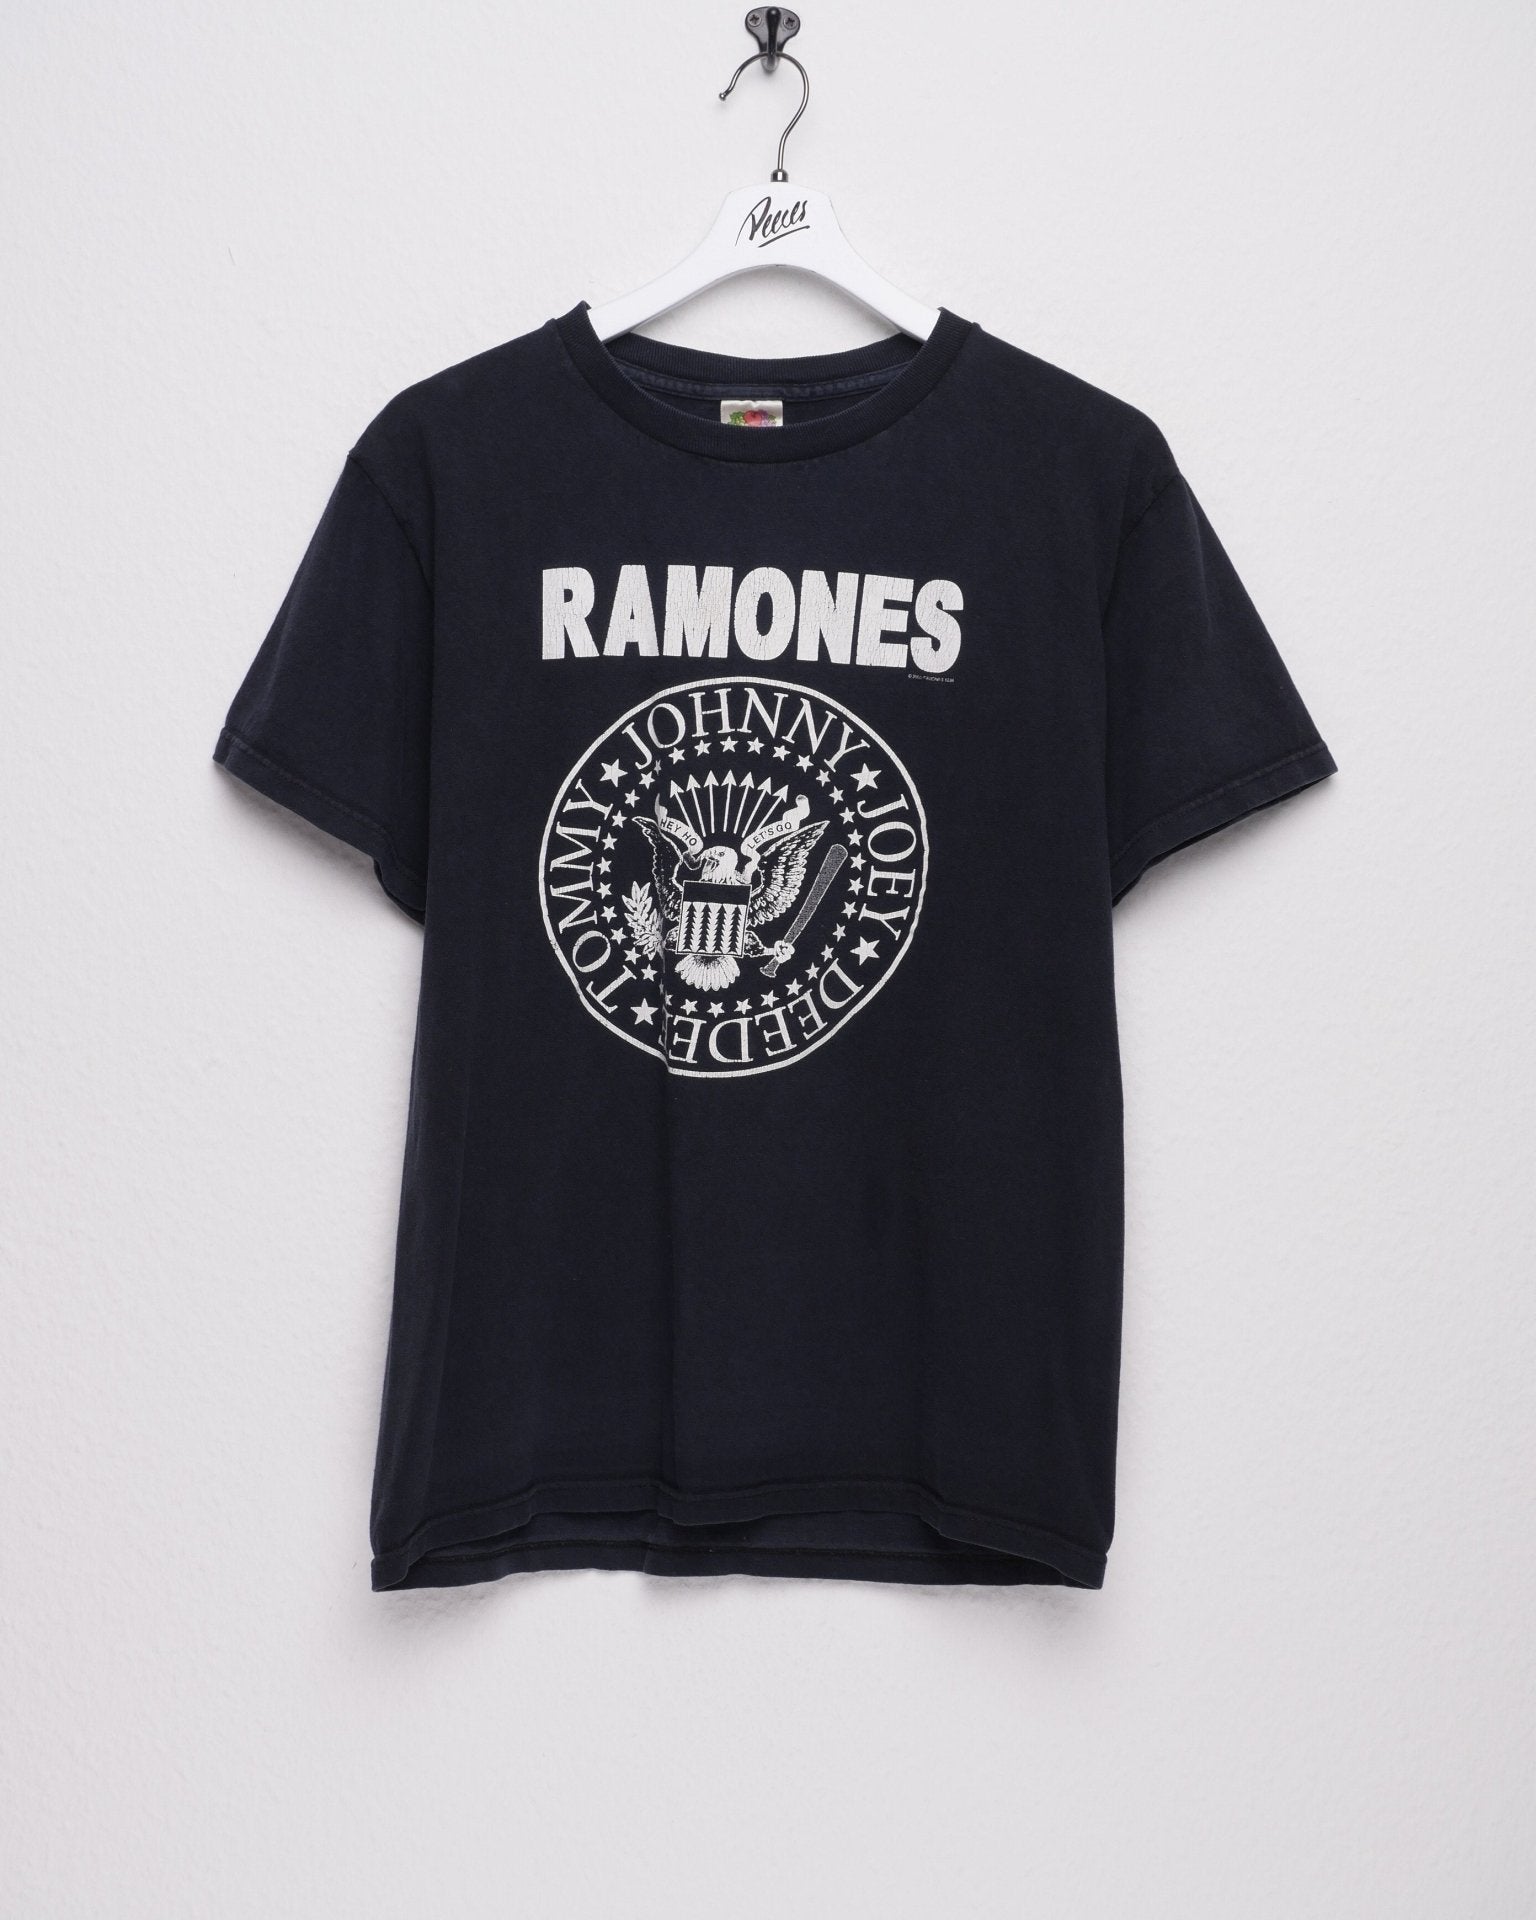 'Ramones' printed Graphic black Shirt - Peeces